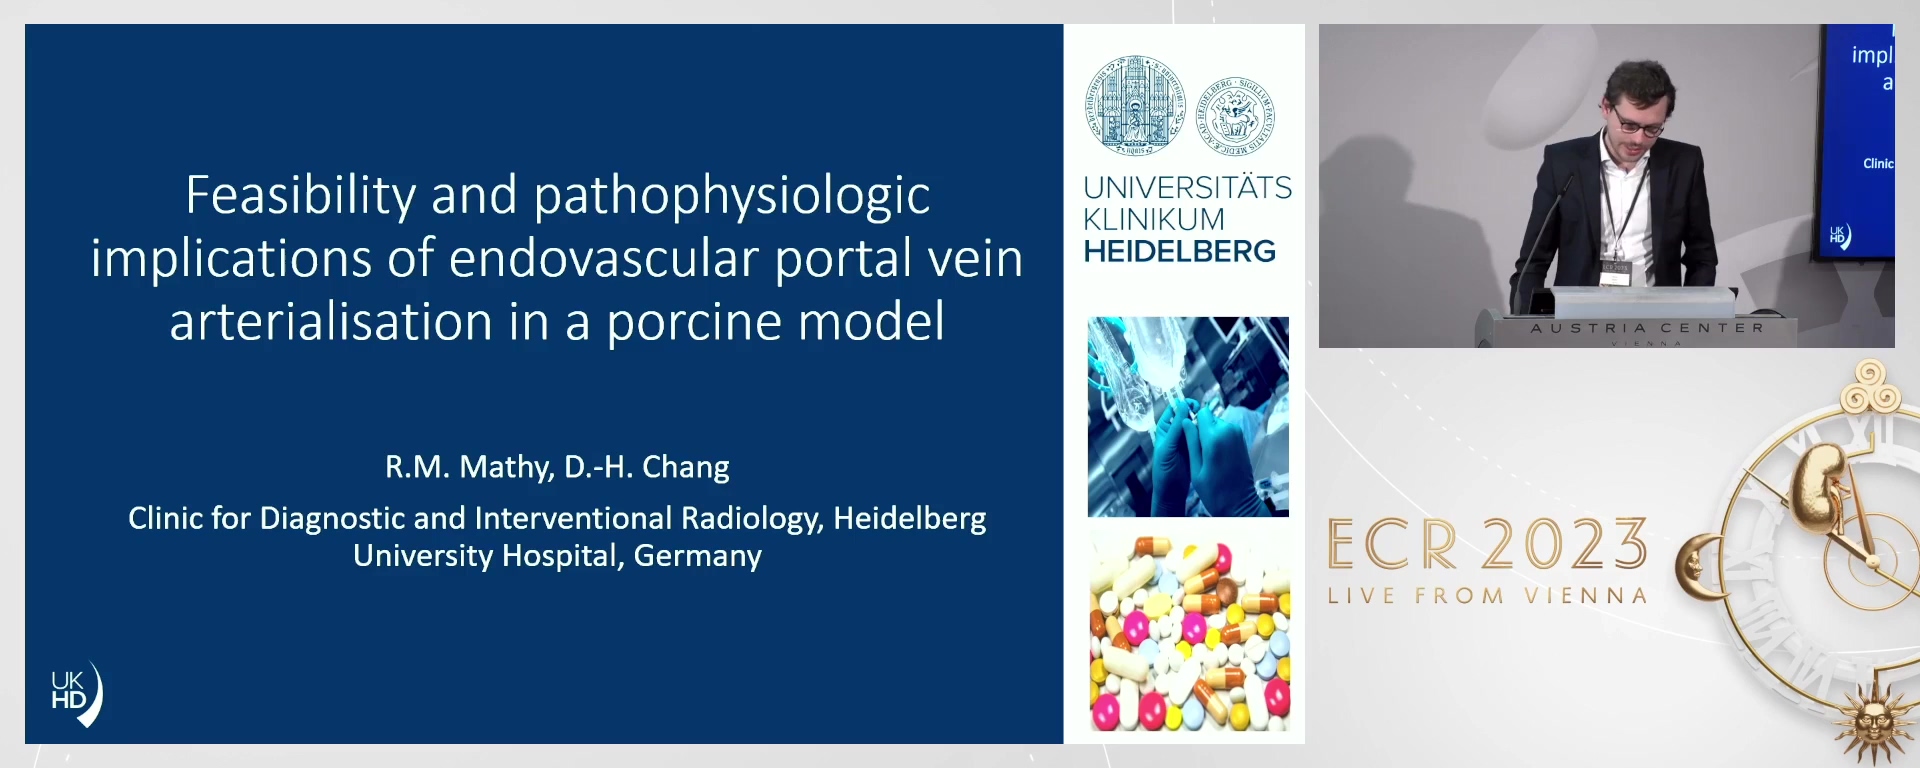 Feasibility and pathophysiologic implications of endovascular portal vein arterialisation in a porcine model - René Michael  Mathy, Heidelberg / DE